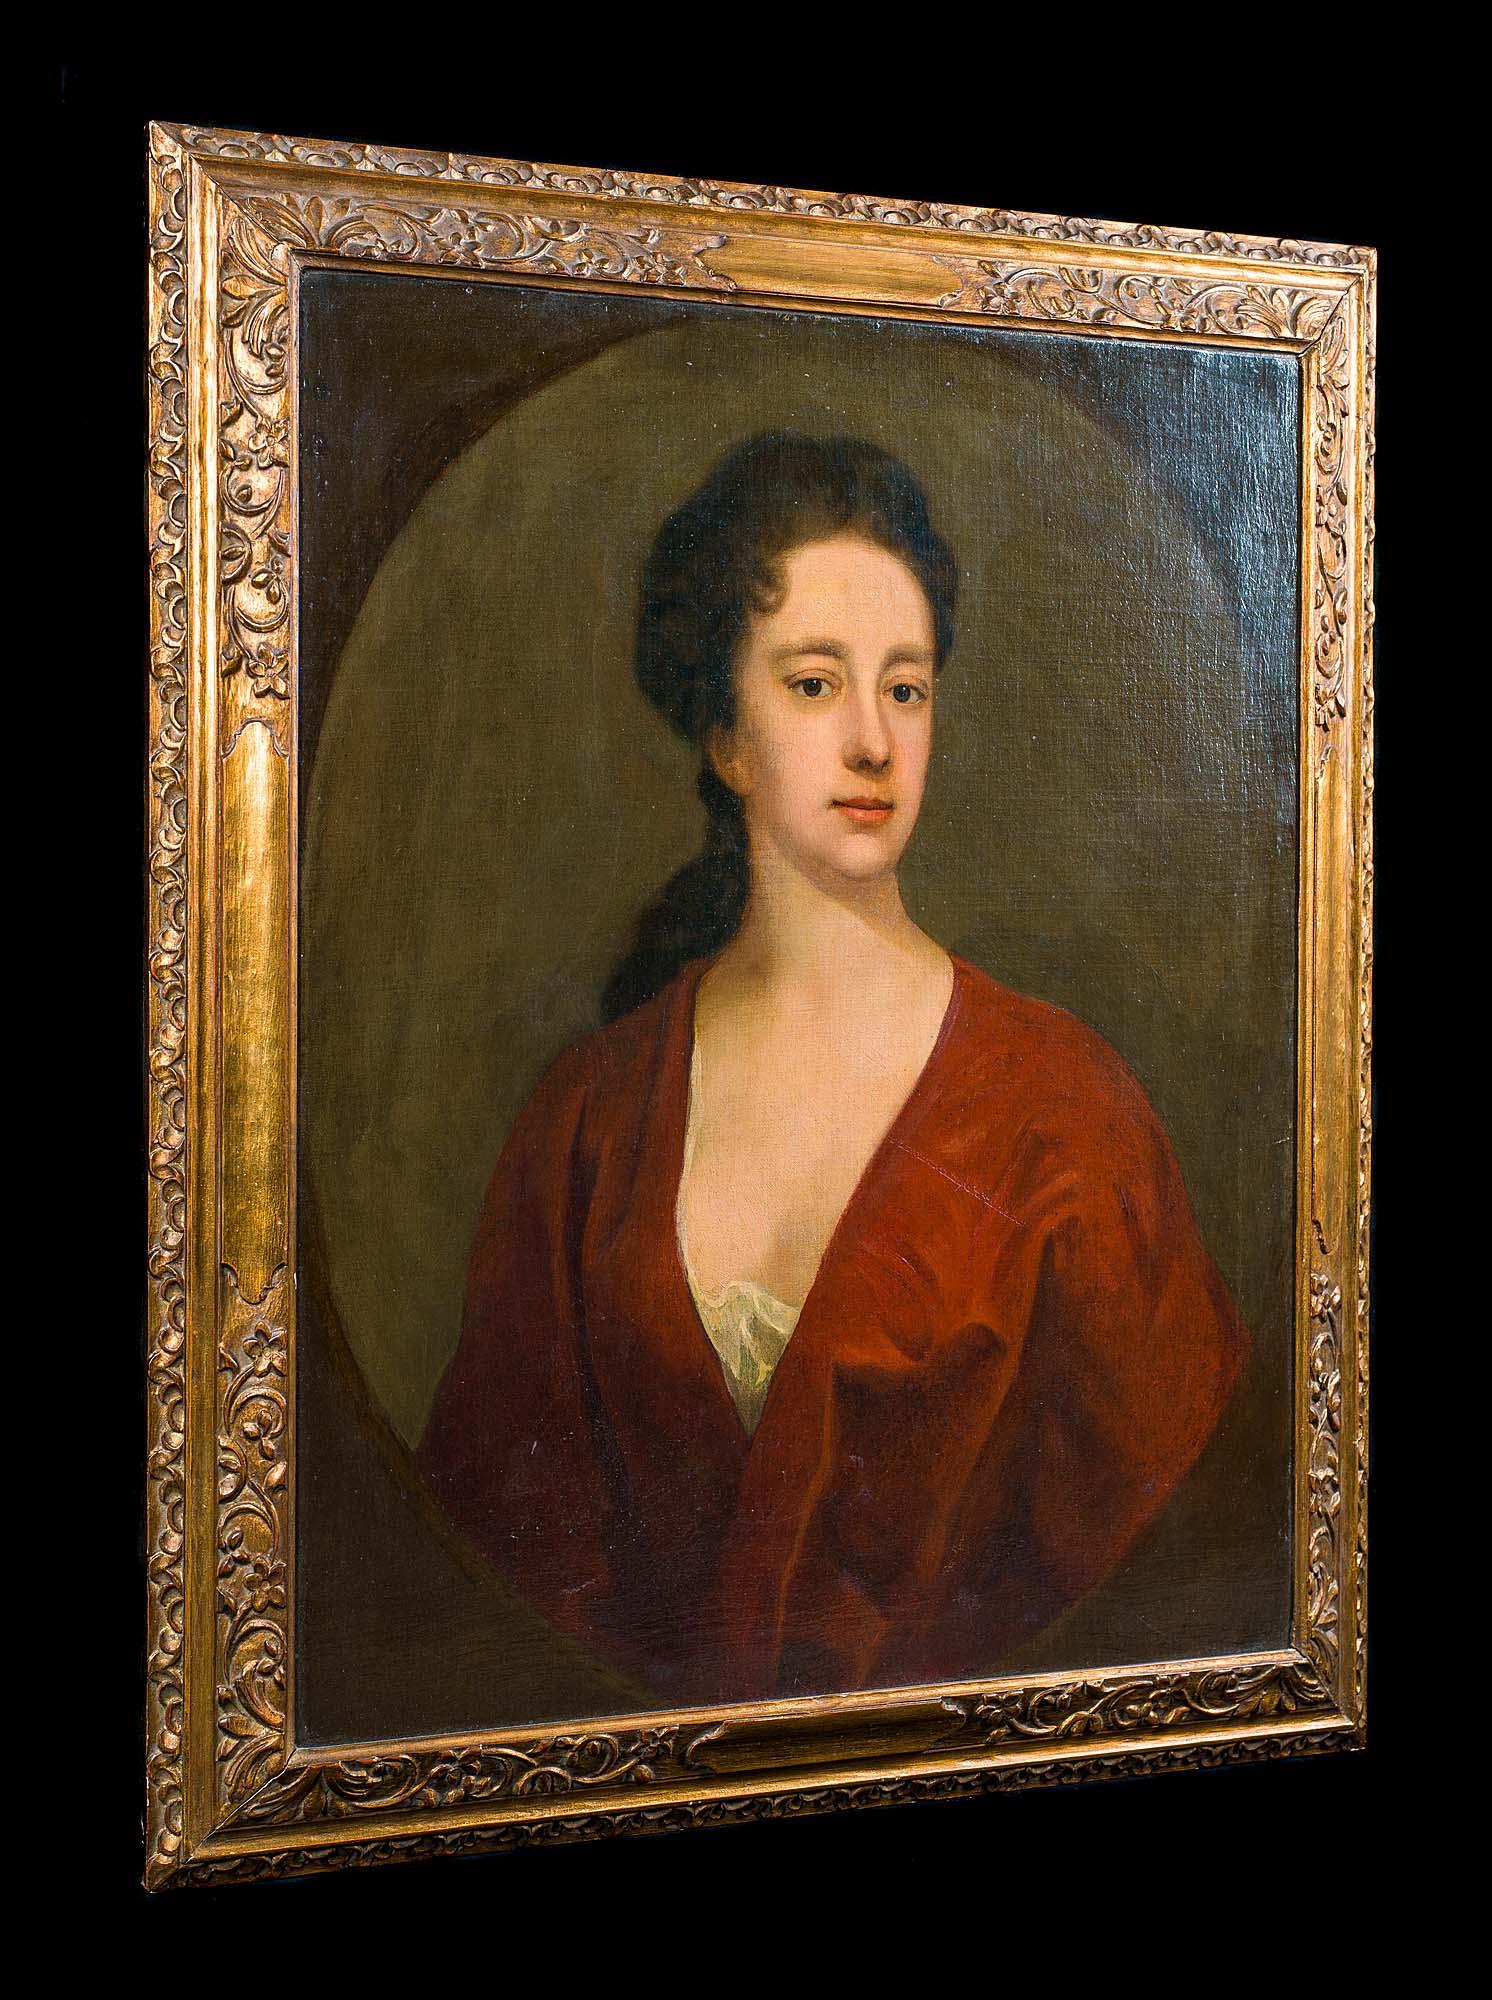 18th century portraits